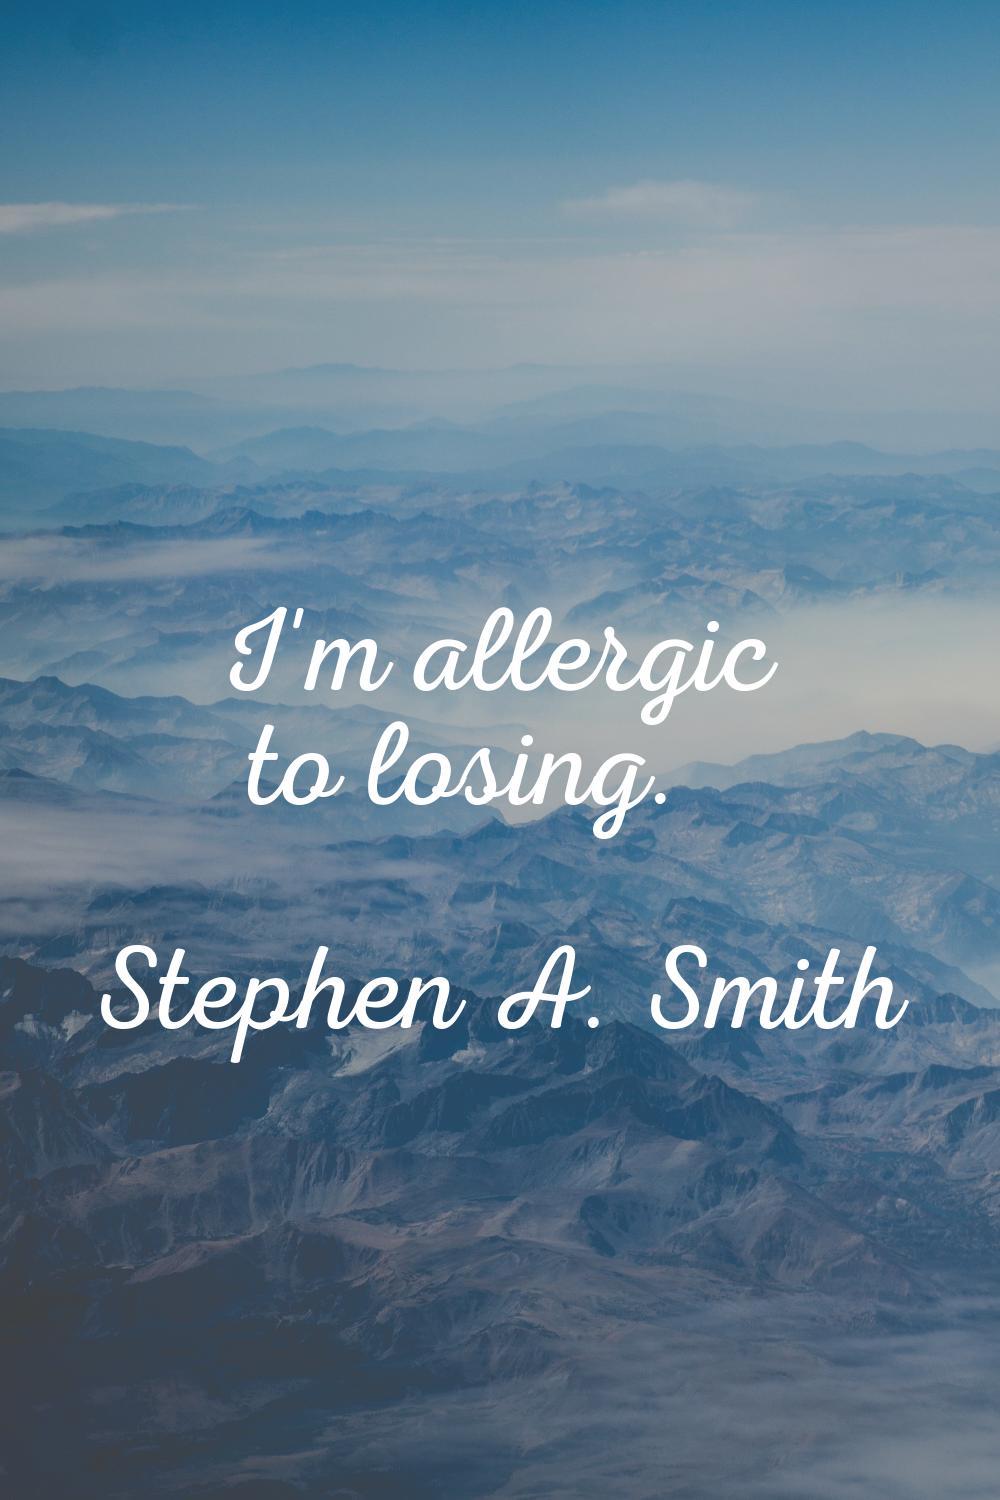 I'm allergic to losing.